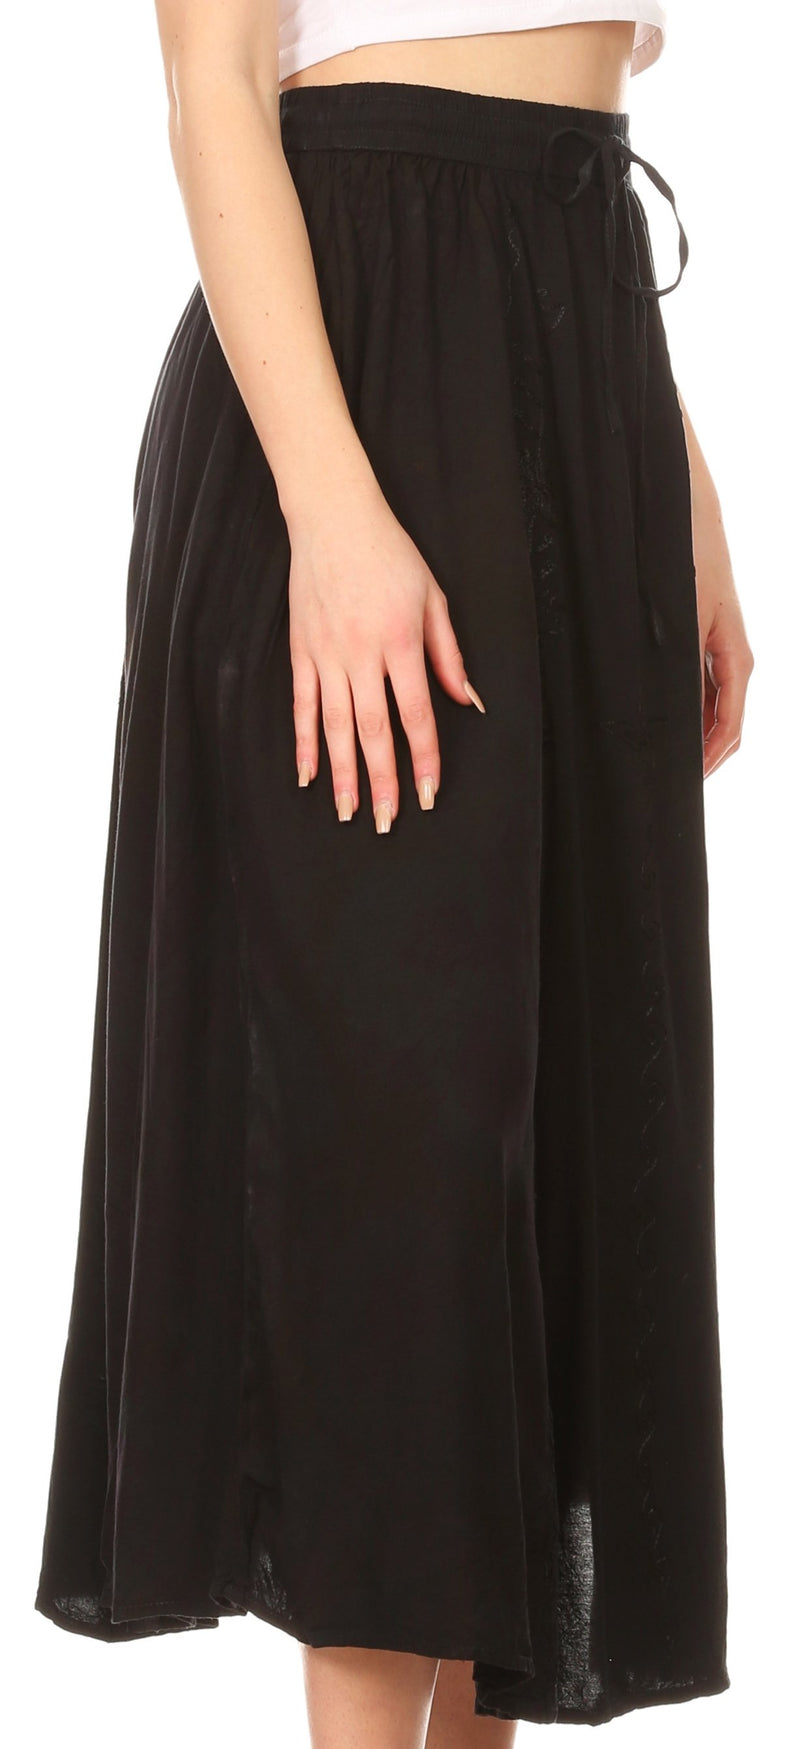 Sakkas Maran Women's Boho Embroidery Skirt with Lace Elastic Waist and Pockets